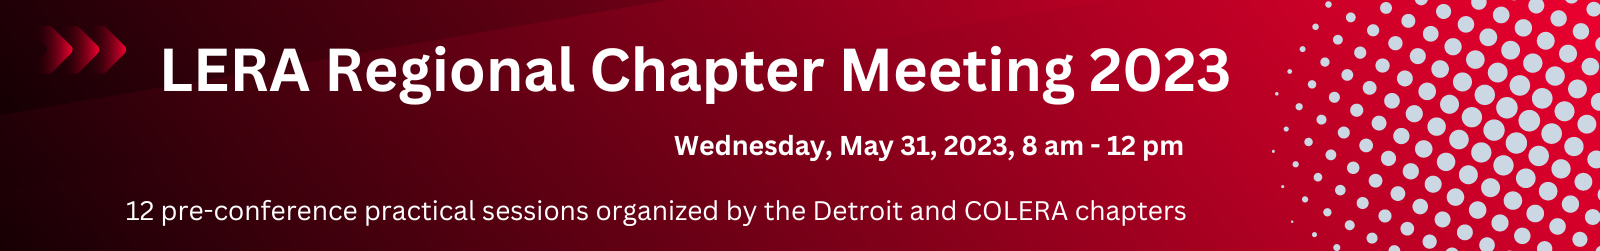 regional chapter meeting banner